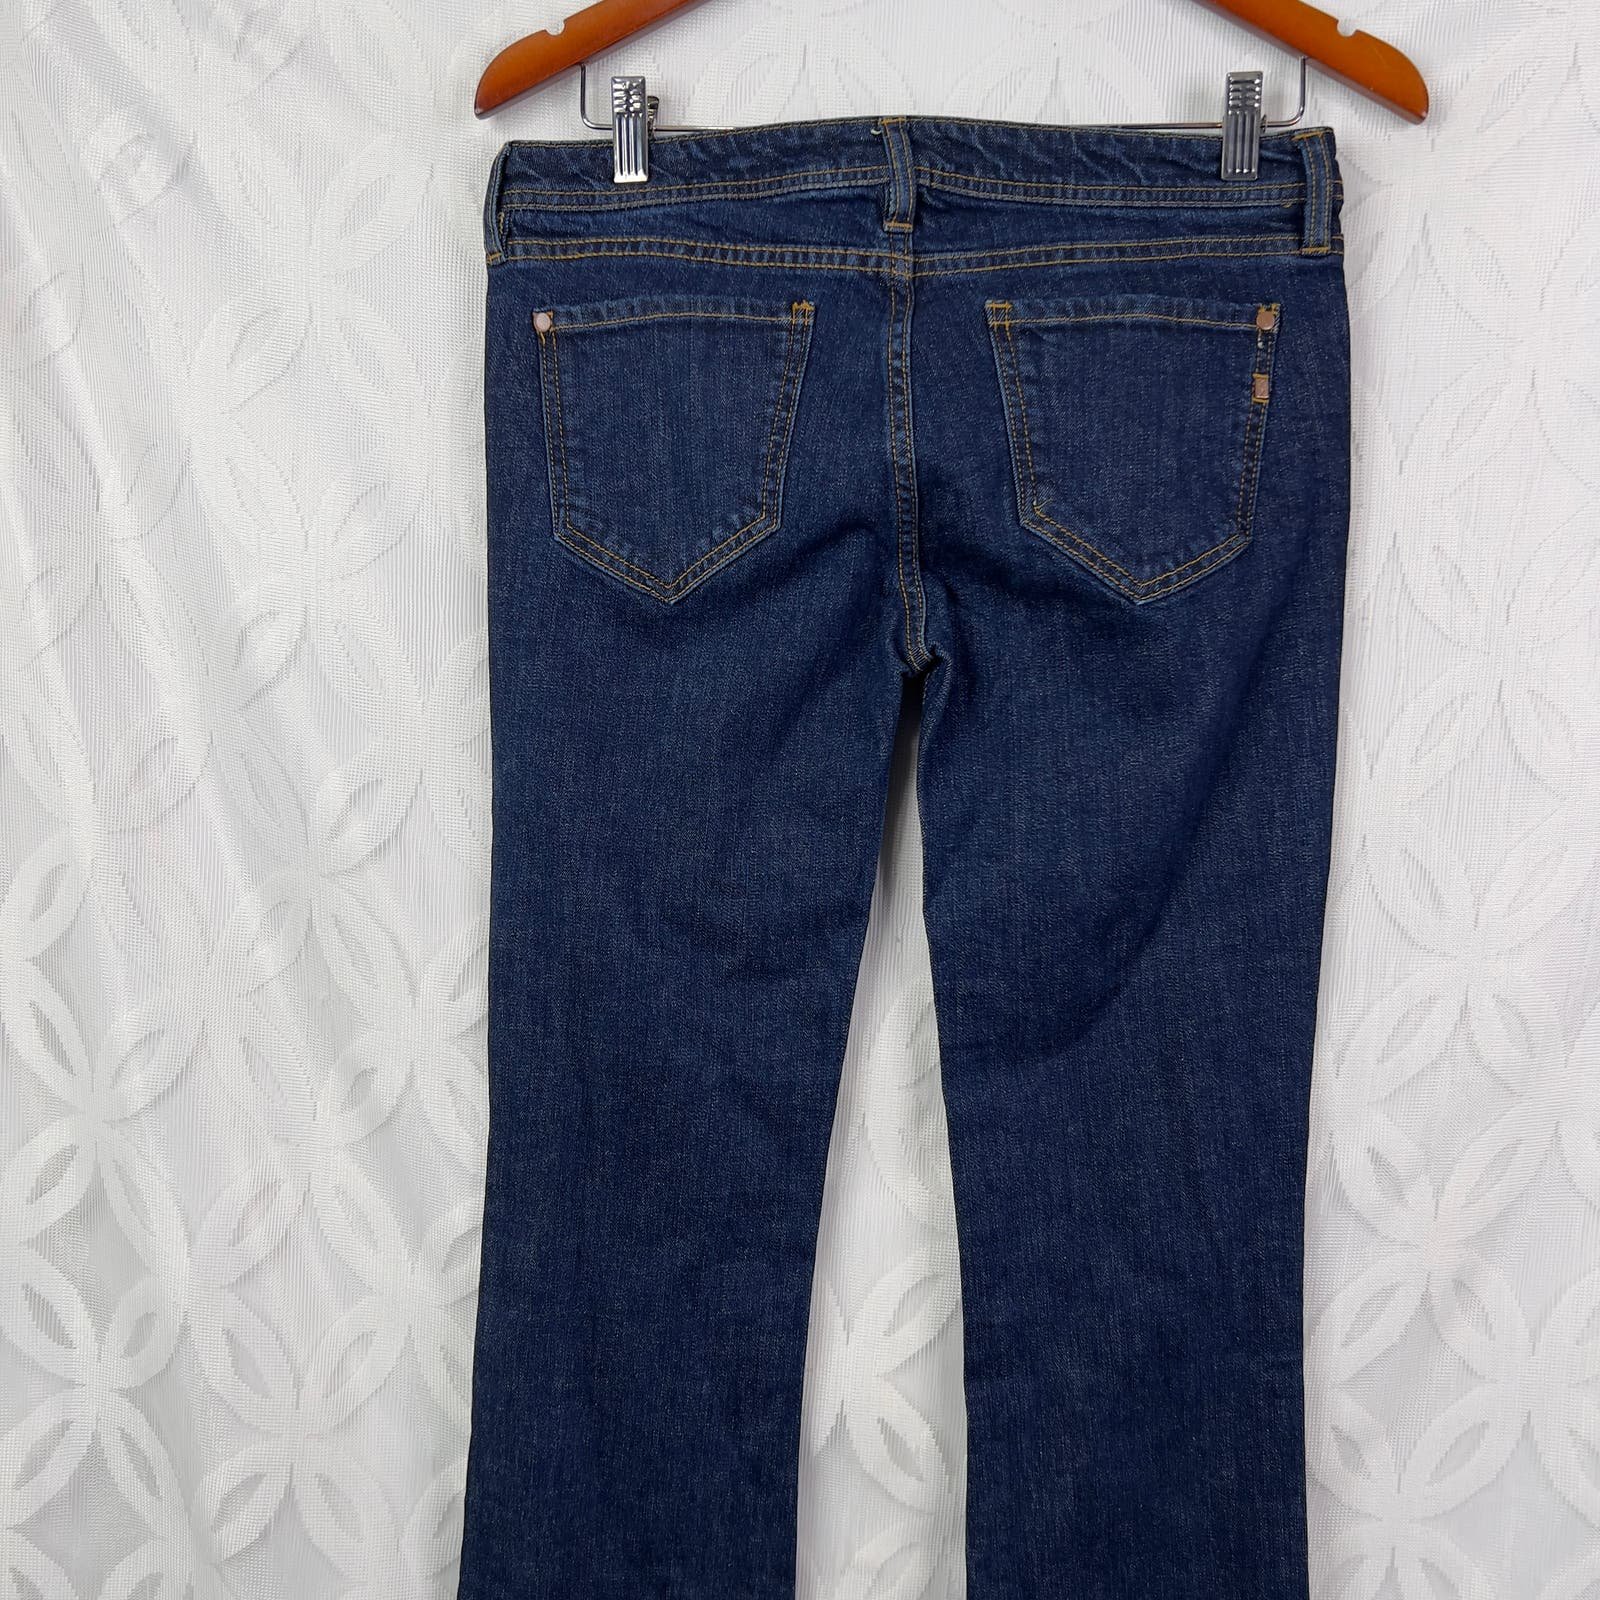 big discount Genetic Denim The Riley Mid Rise Boot Cut Jeans Sz. 28 NWOT $228 oG98M6eum just buy it